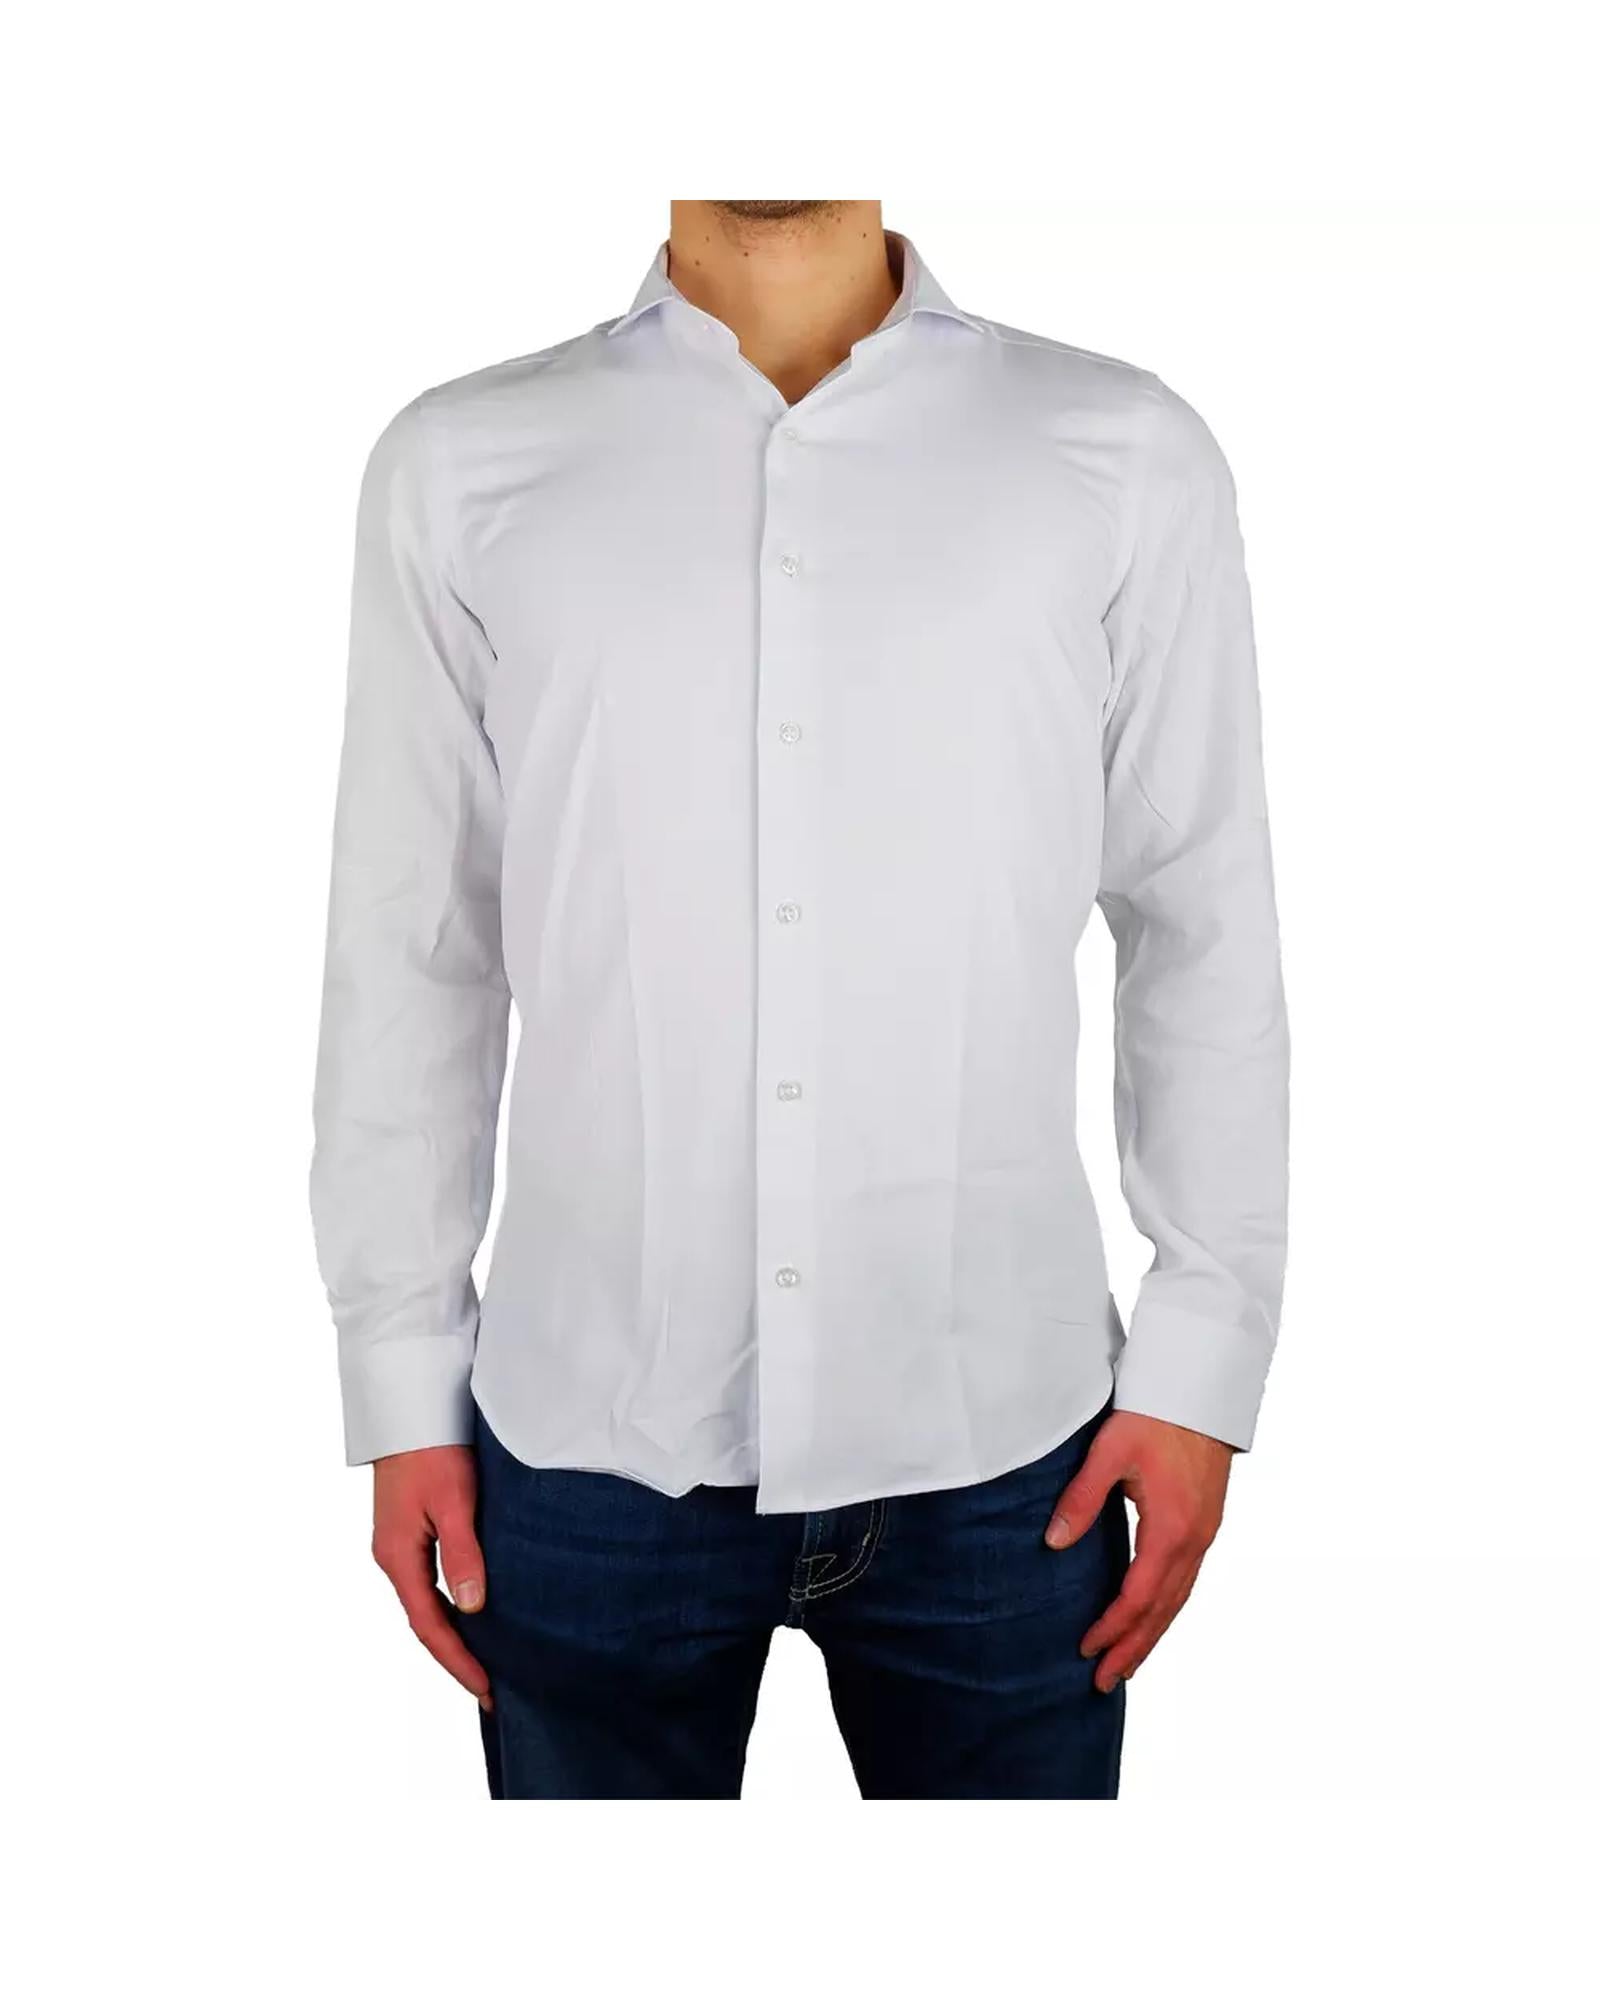 Milano Shirt in Oxford White Cotton 45 IT Men